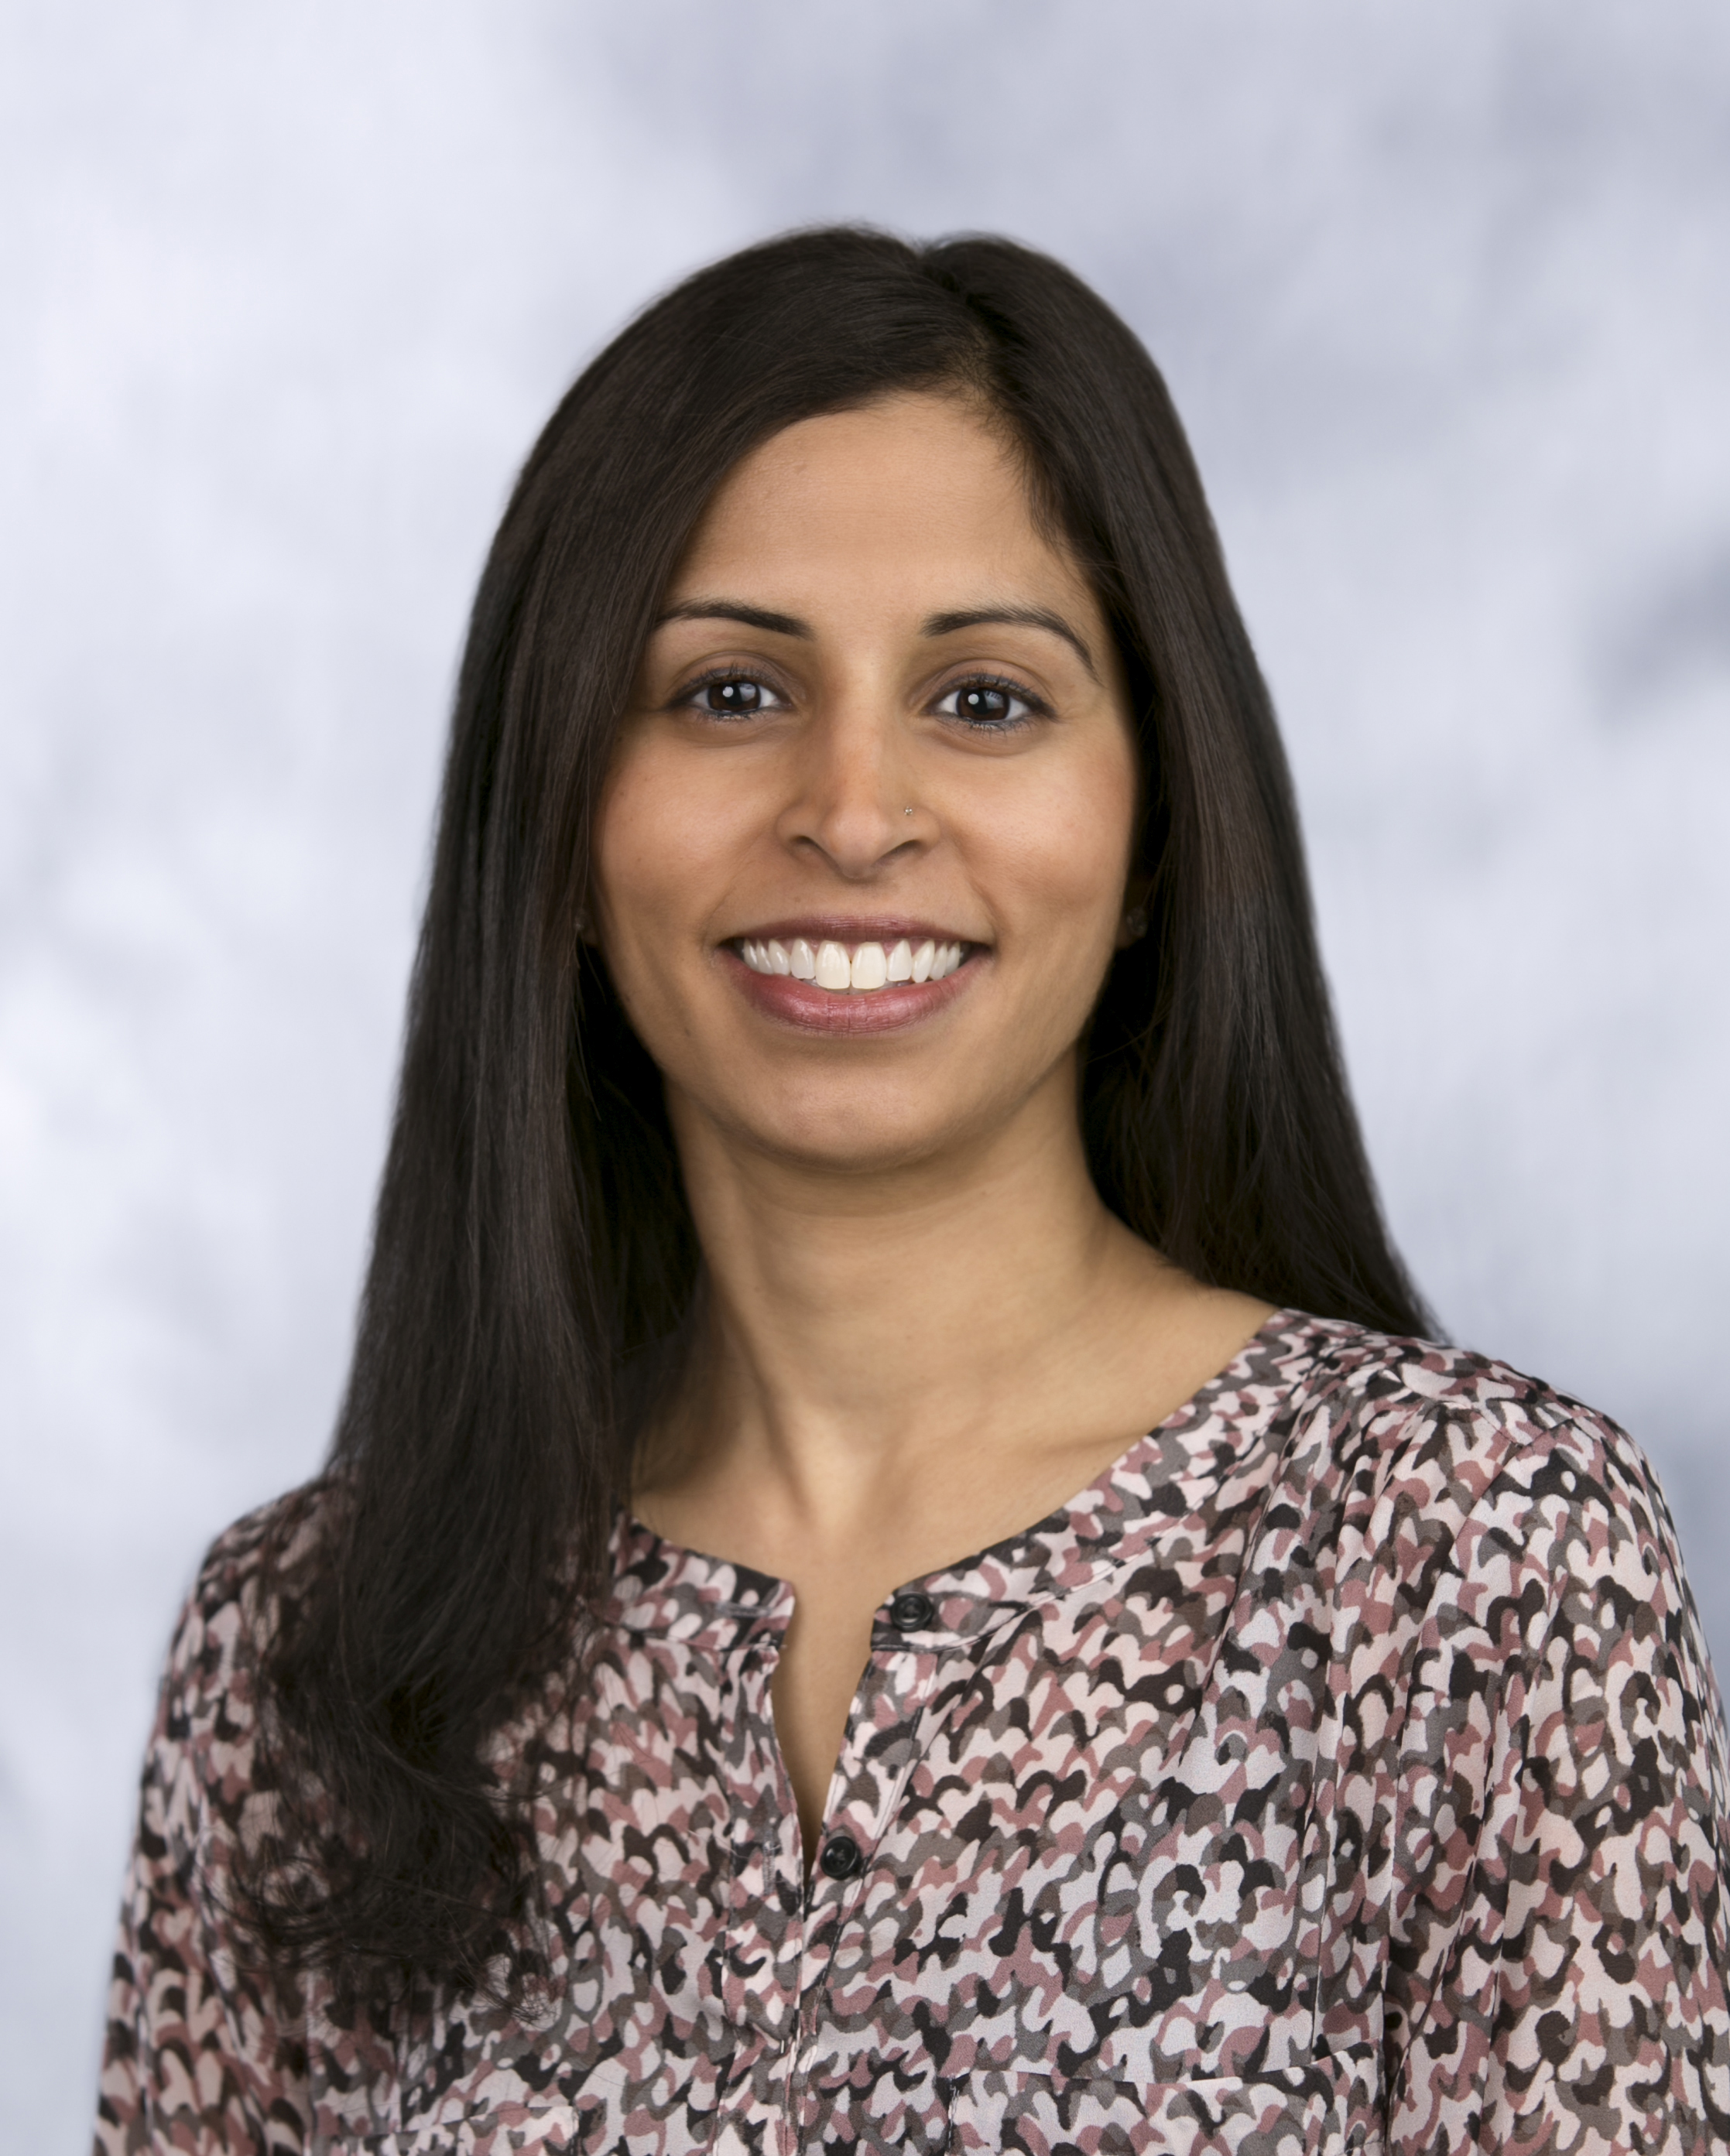 Nikki Saraiya, MD discusses diabetes and vision loss from diabetic eye disease